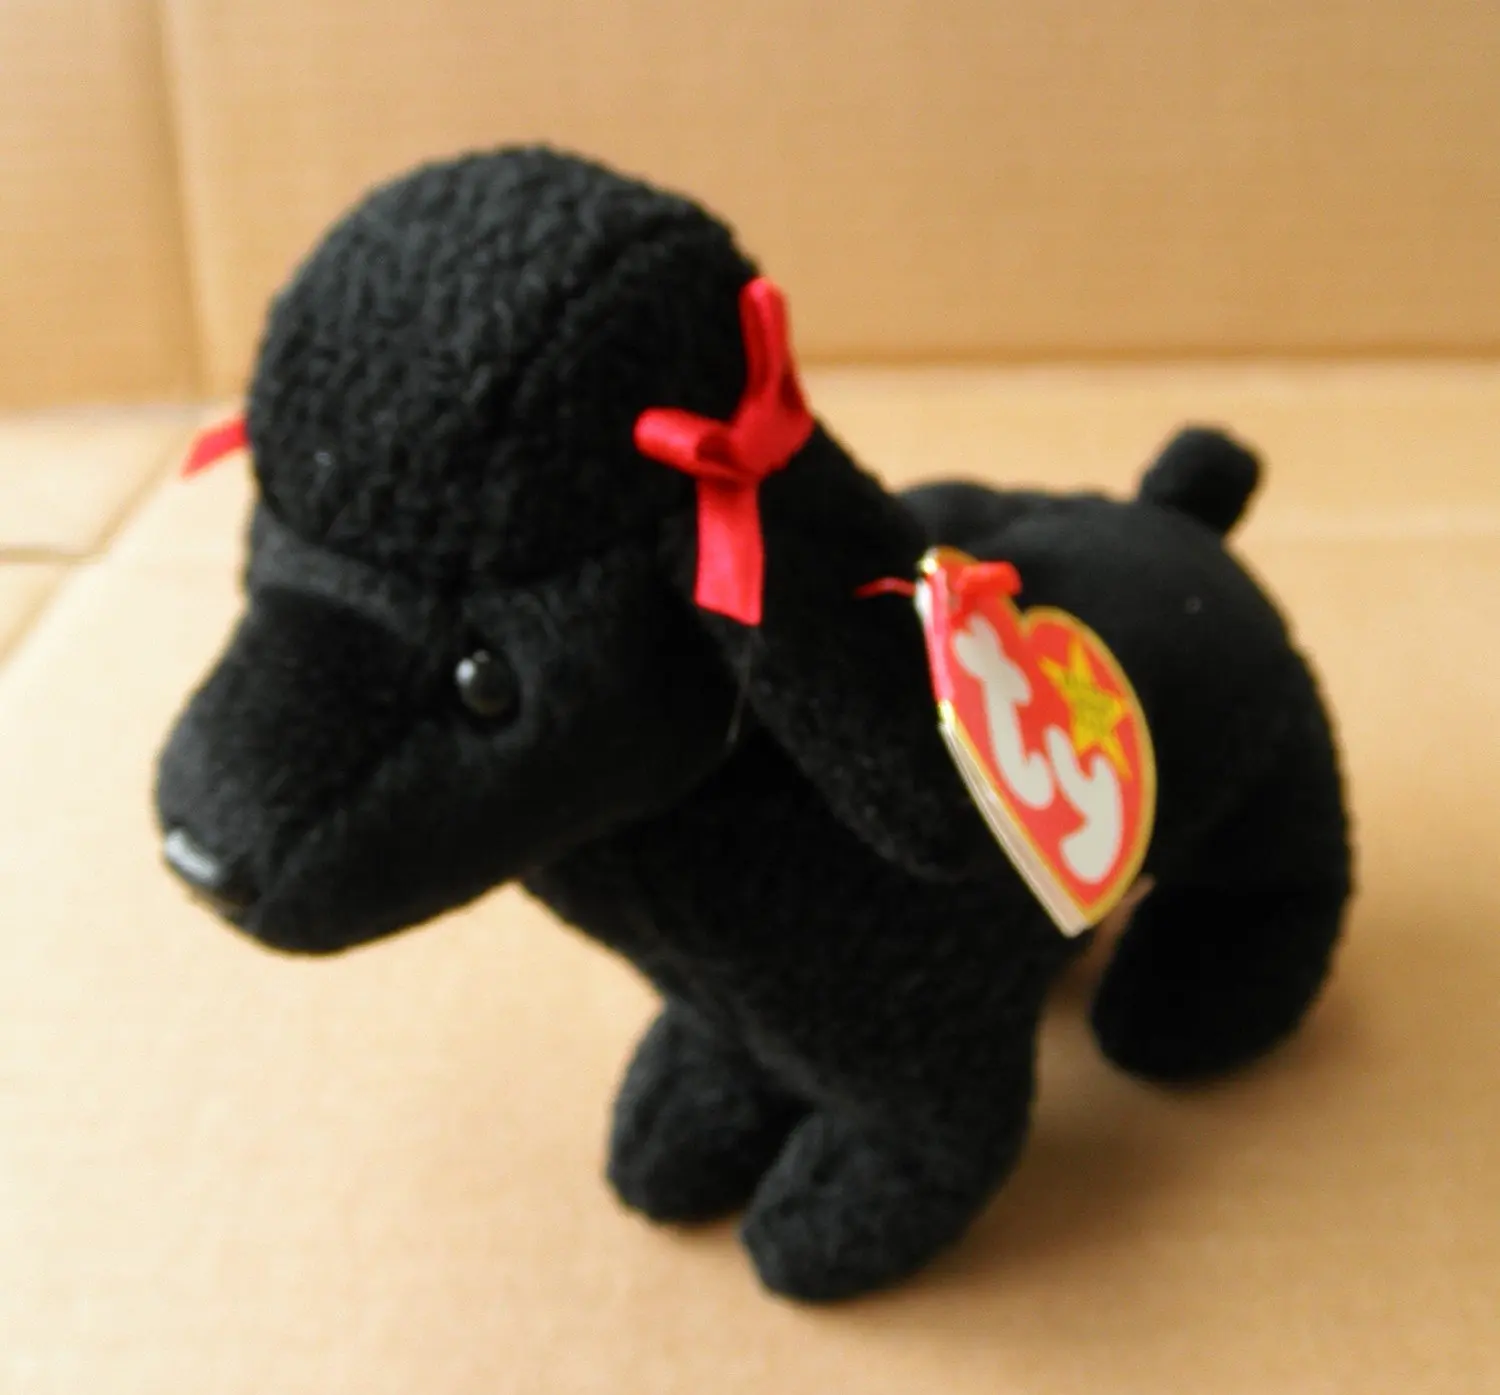 black toy poodle stuffed animal